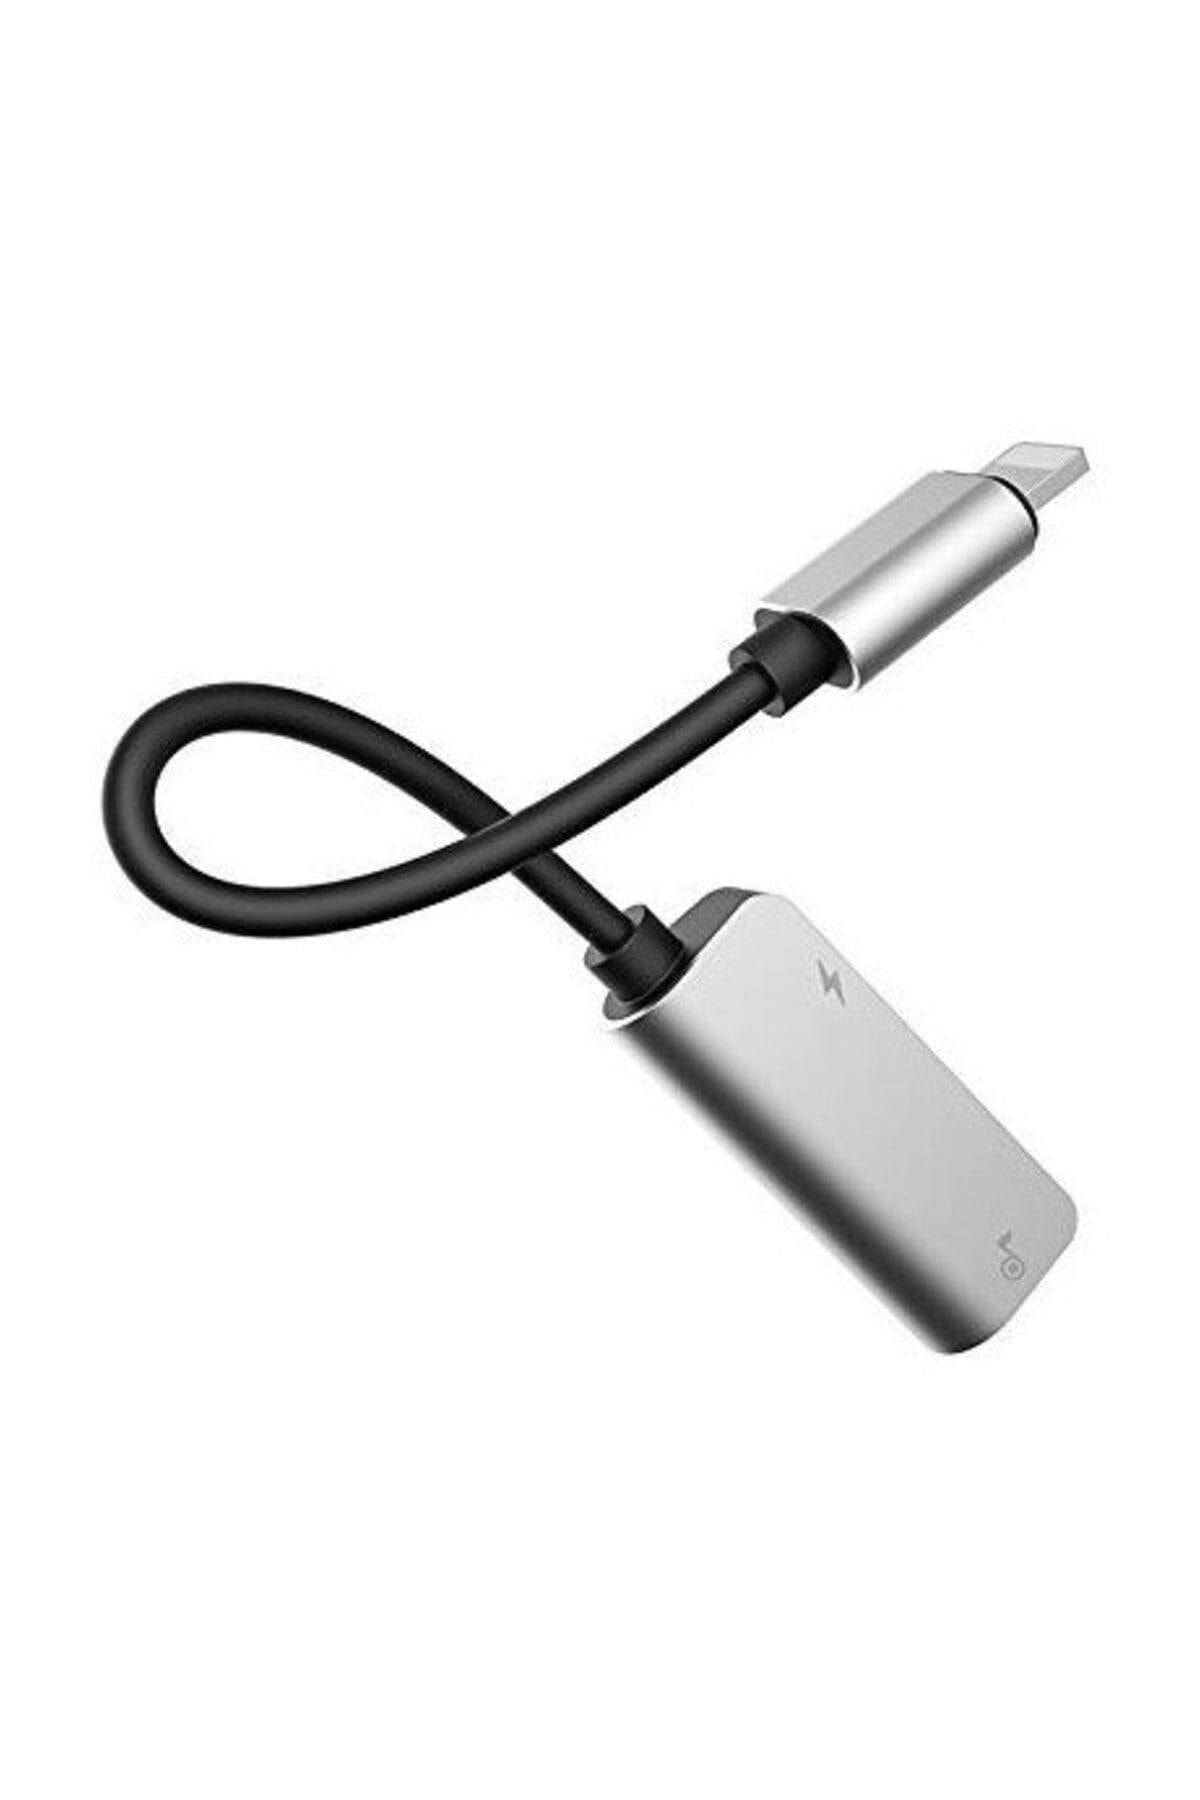 Syronix Apple iPhone Lightning 2in1 Aux 3.5mm Kulaklık Dönüştürücü Şarj Girişli Adaptör